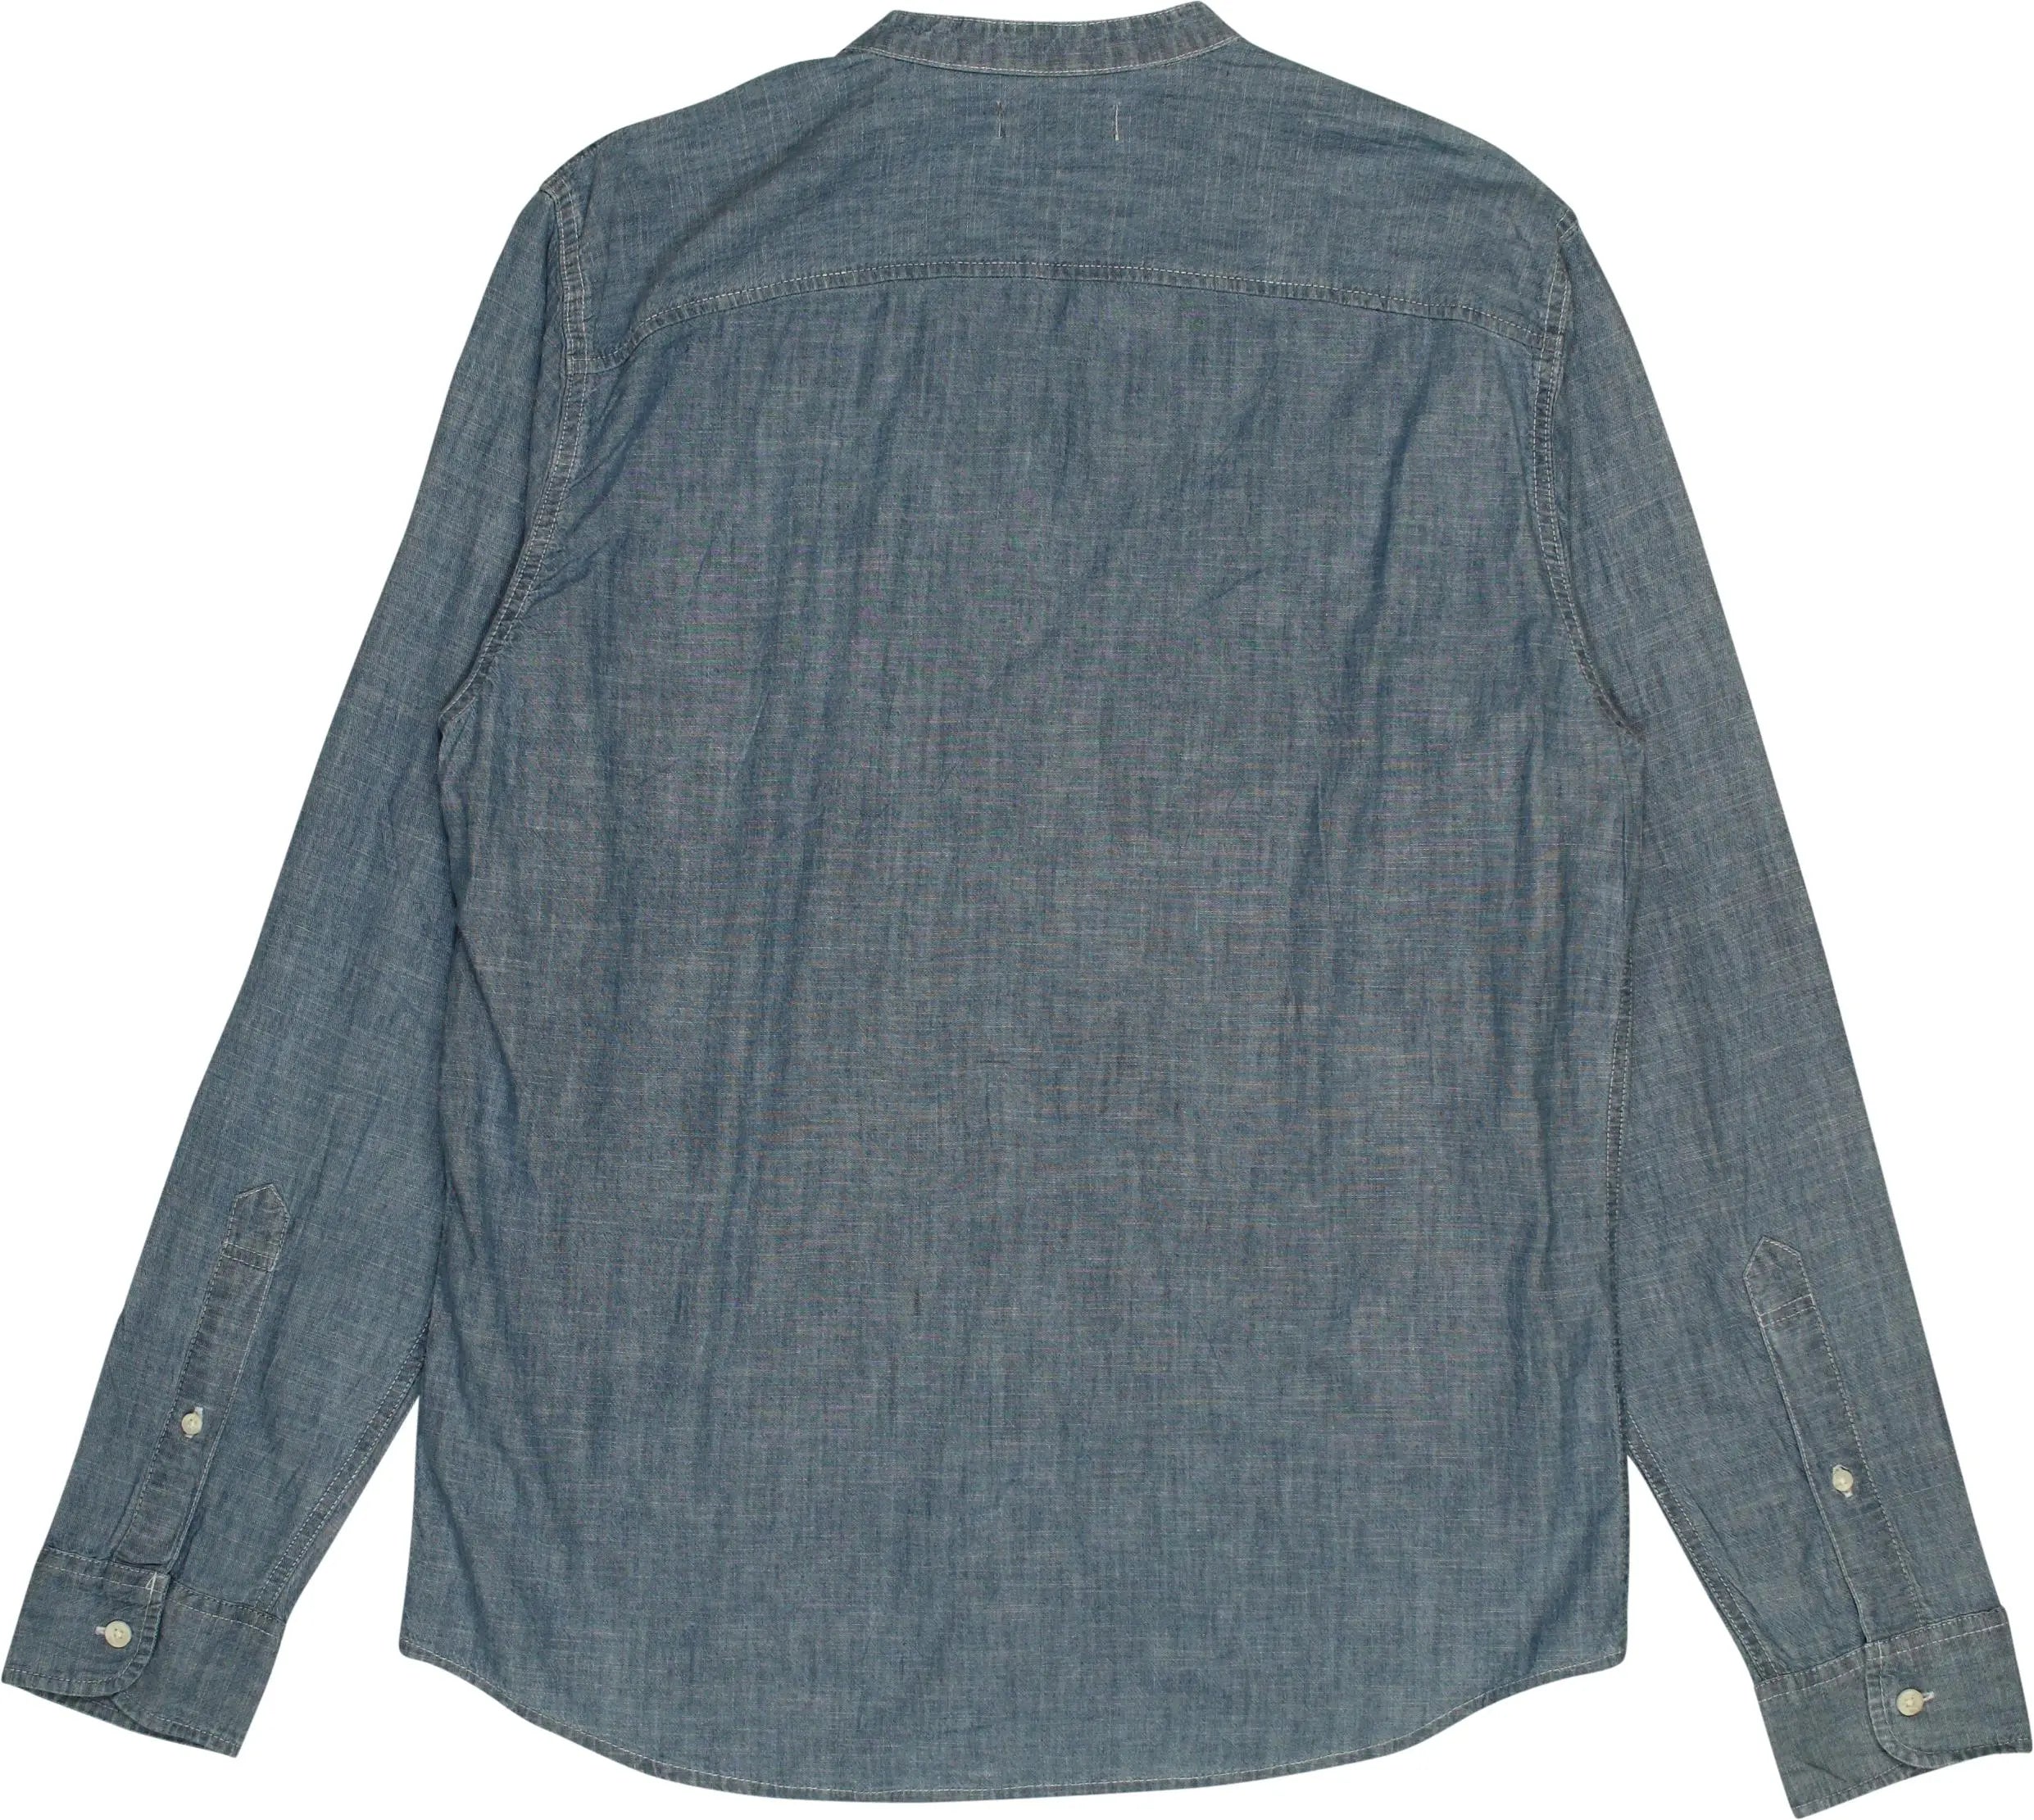 Hollister - Denim Shirt- ThriftTale.com - Vintage and second handclothing